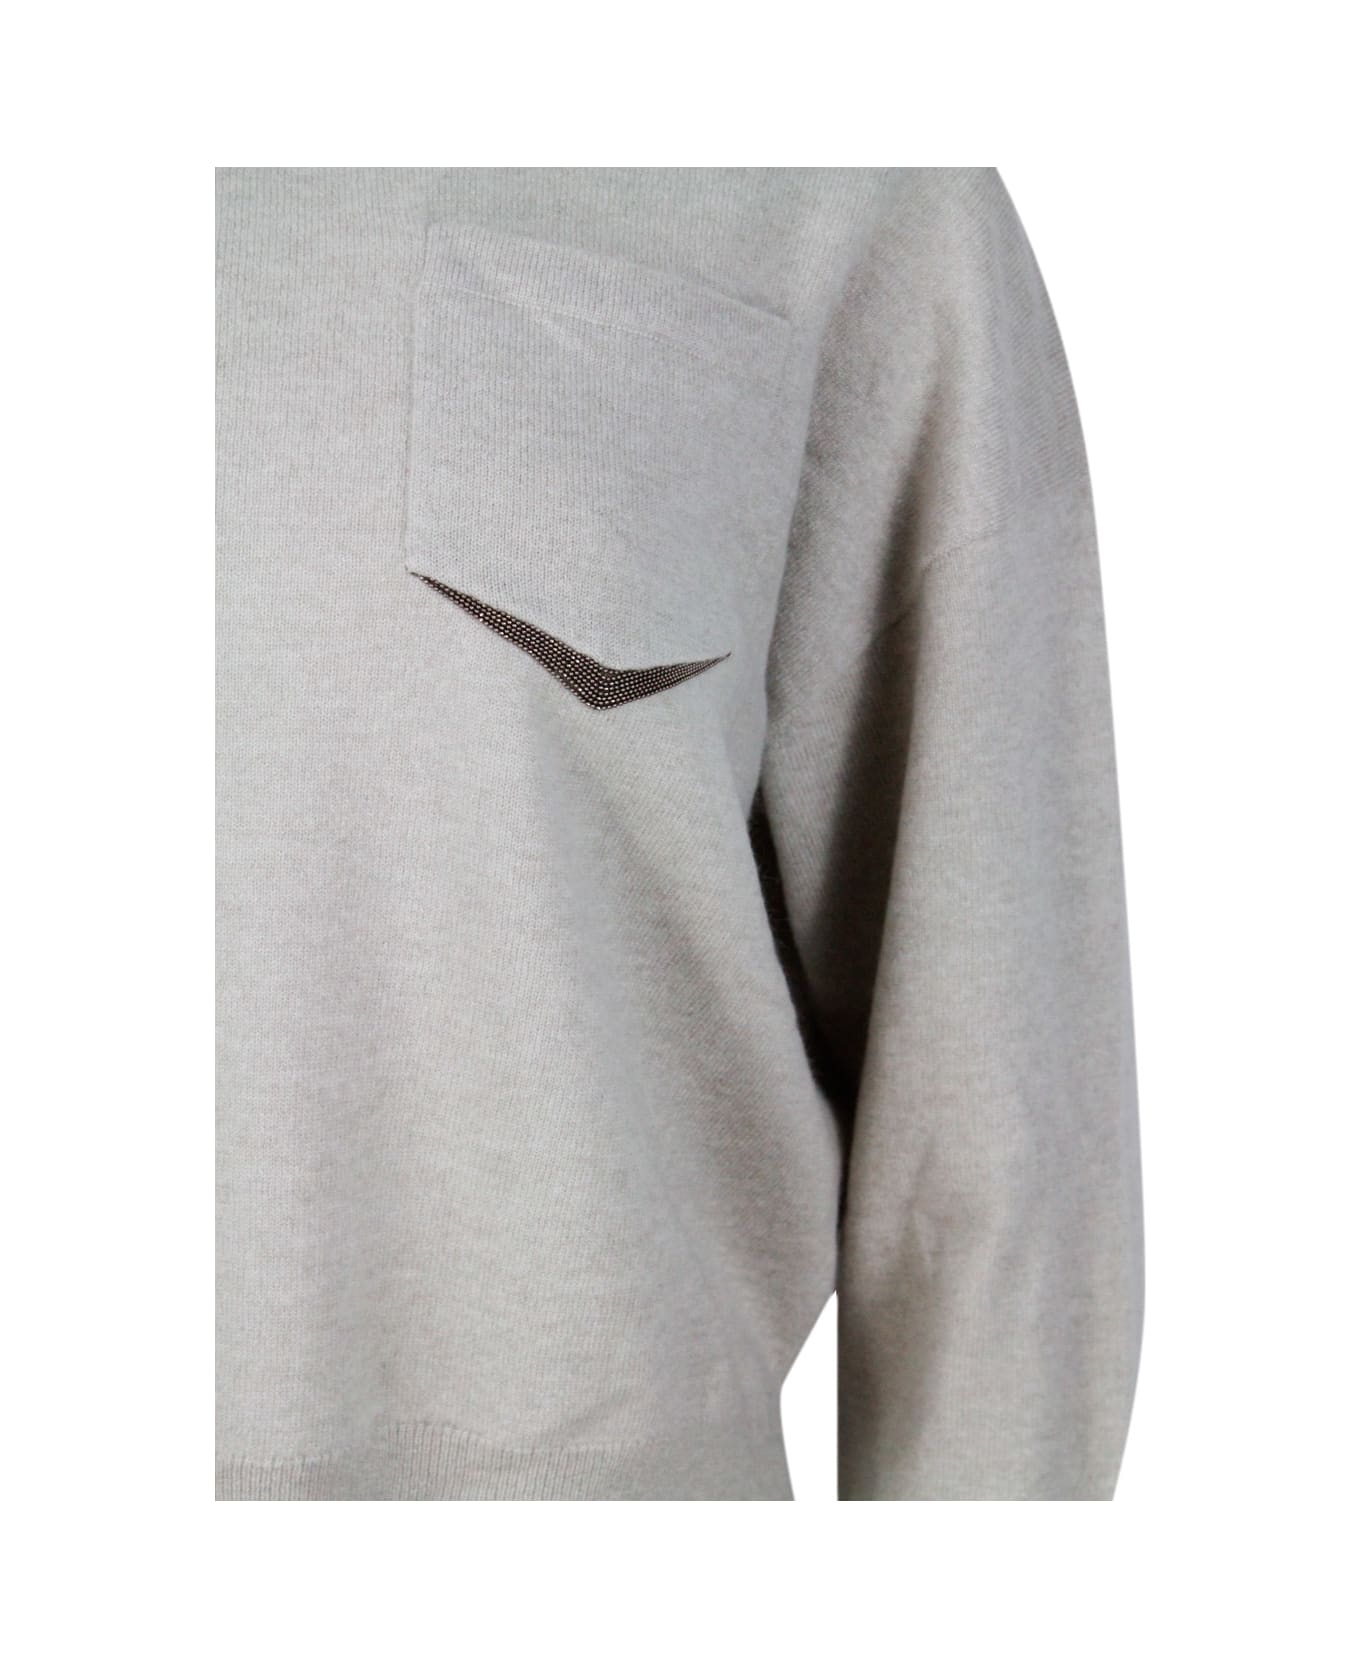 Brunello Cucinelli Long-sleeved Crewneck Sweater In Fine Cashmere - Beige freddo